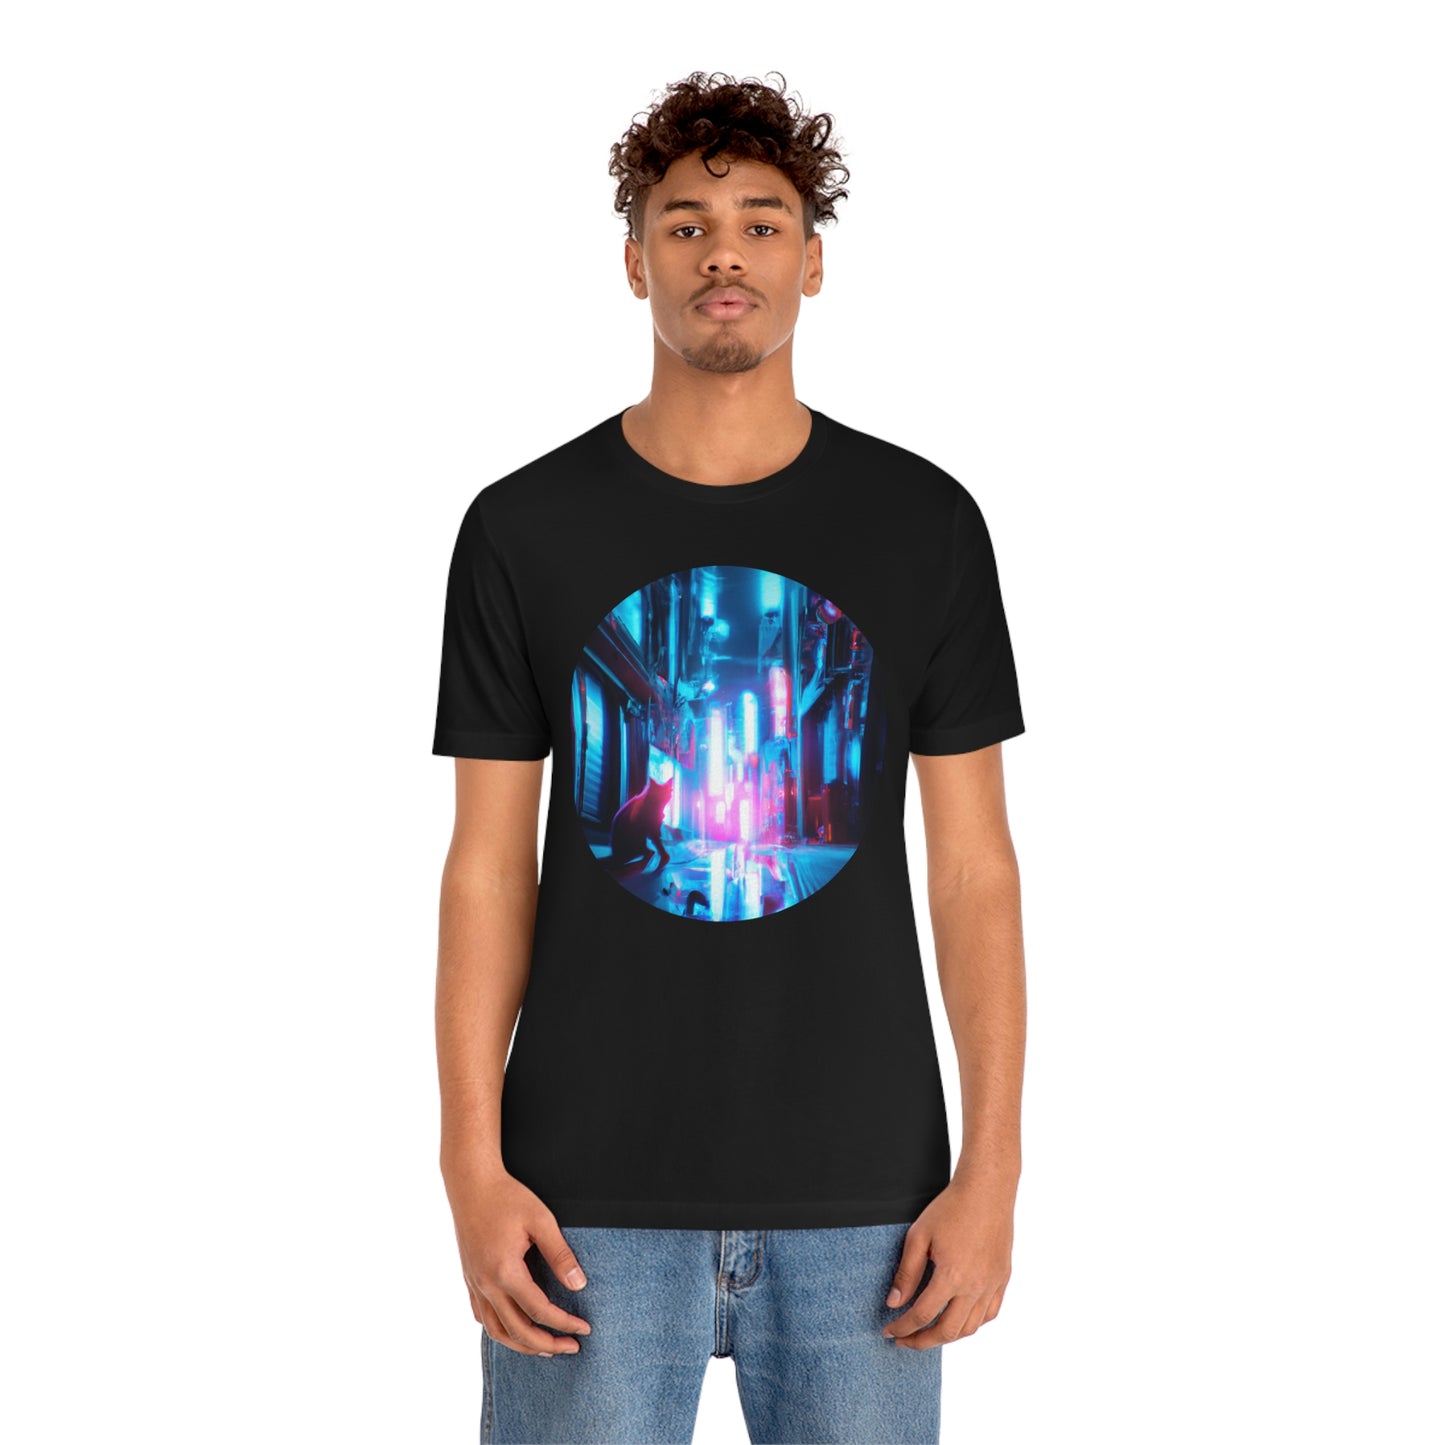 Stray inspired Cyberpunk Cat Shirt